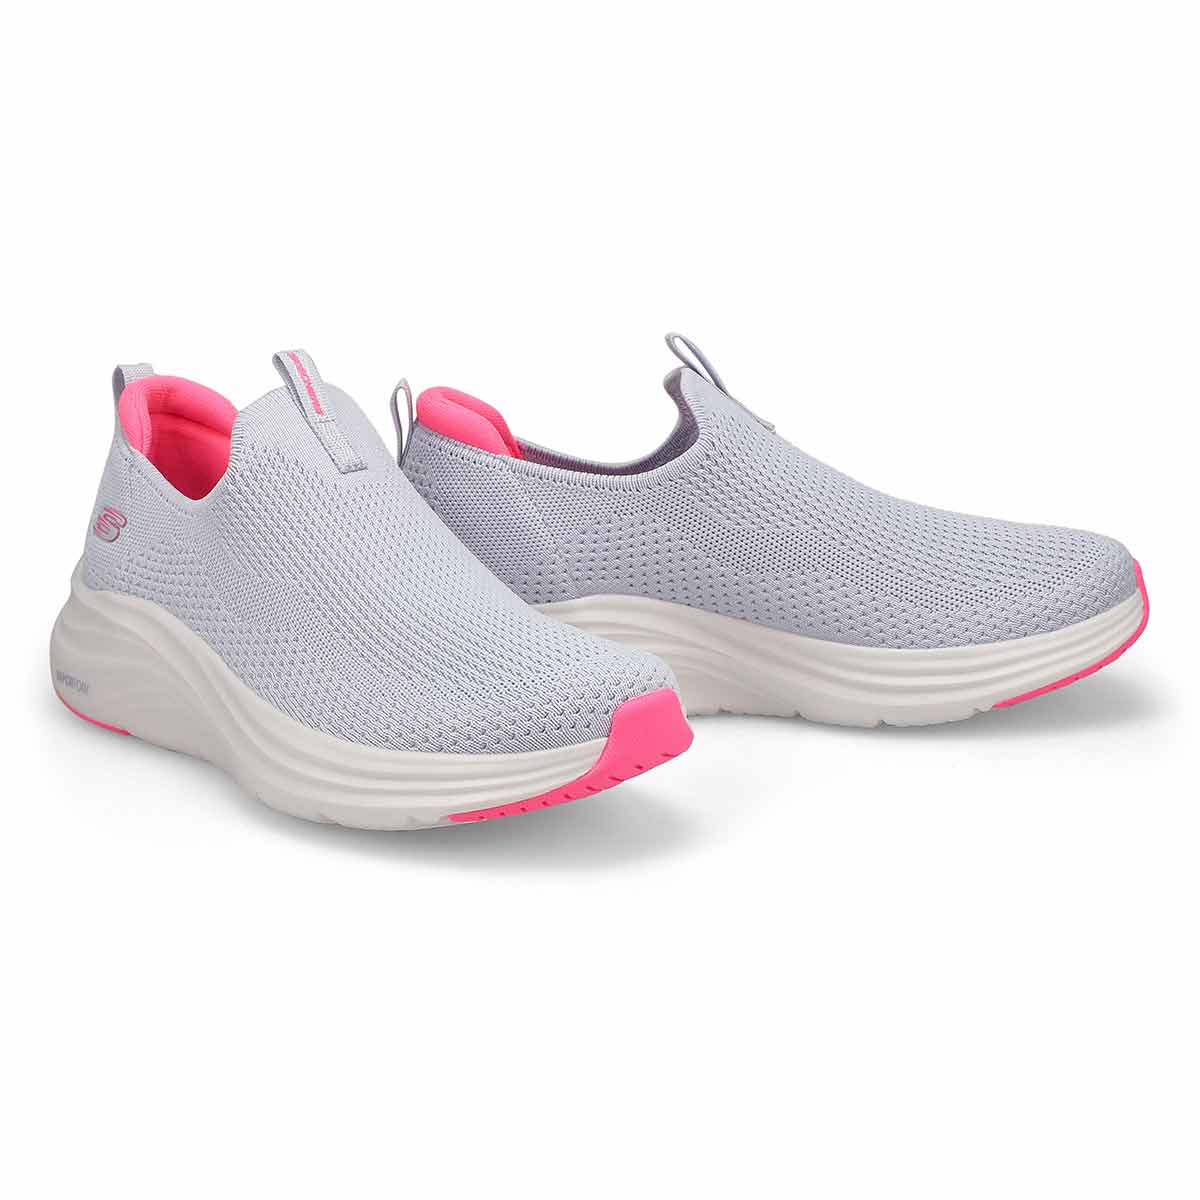 Womens Vapor Foam Slip On Sneaker - Light Blue/Pink